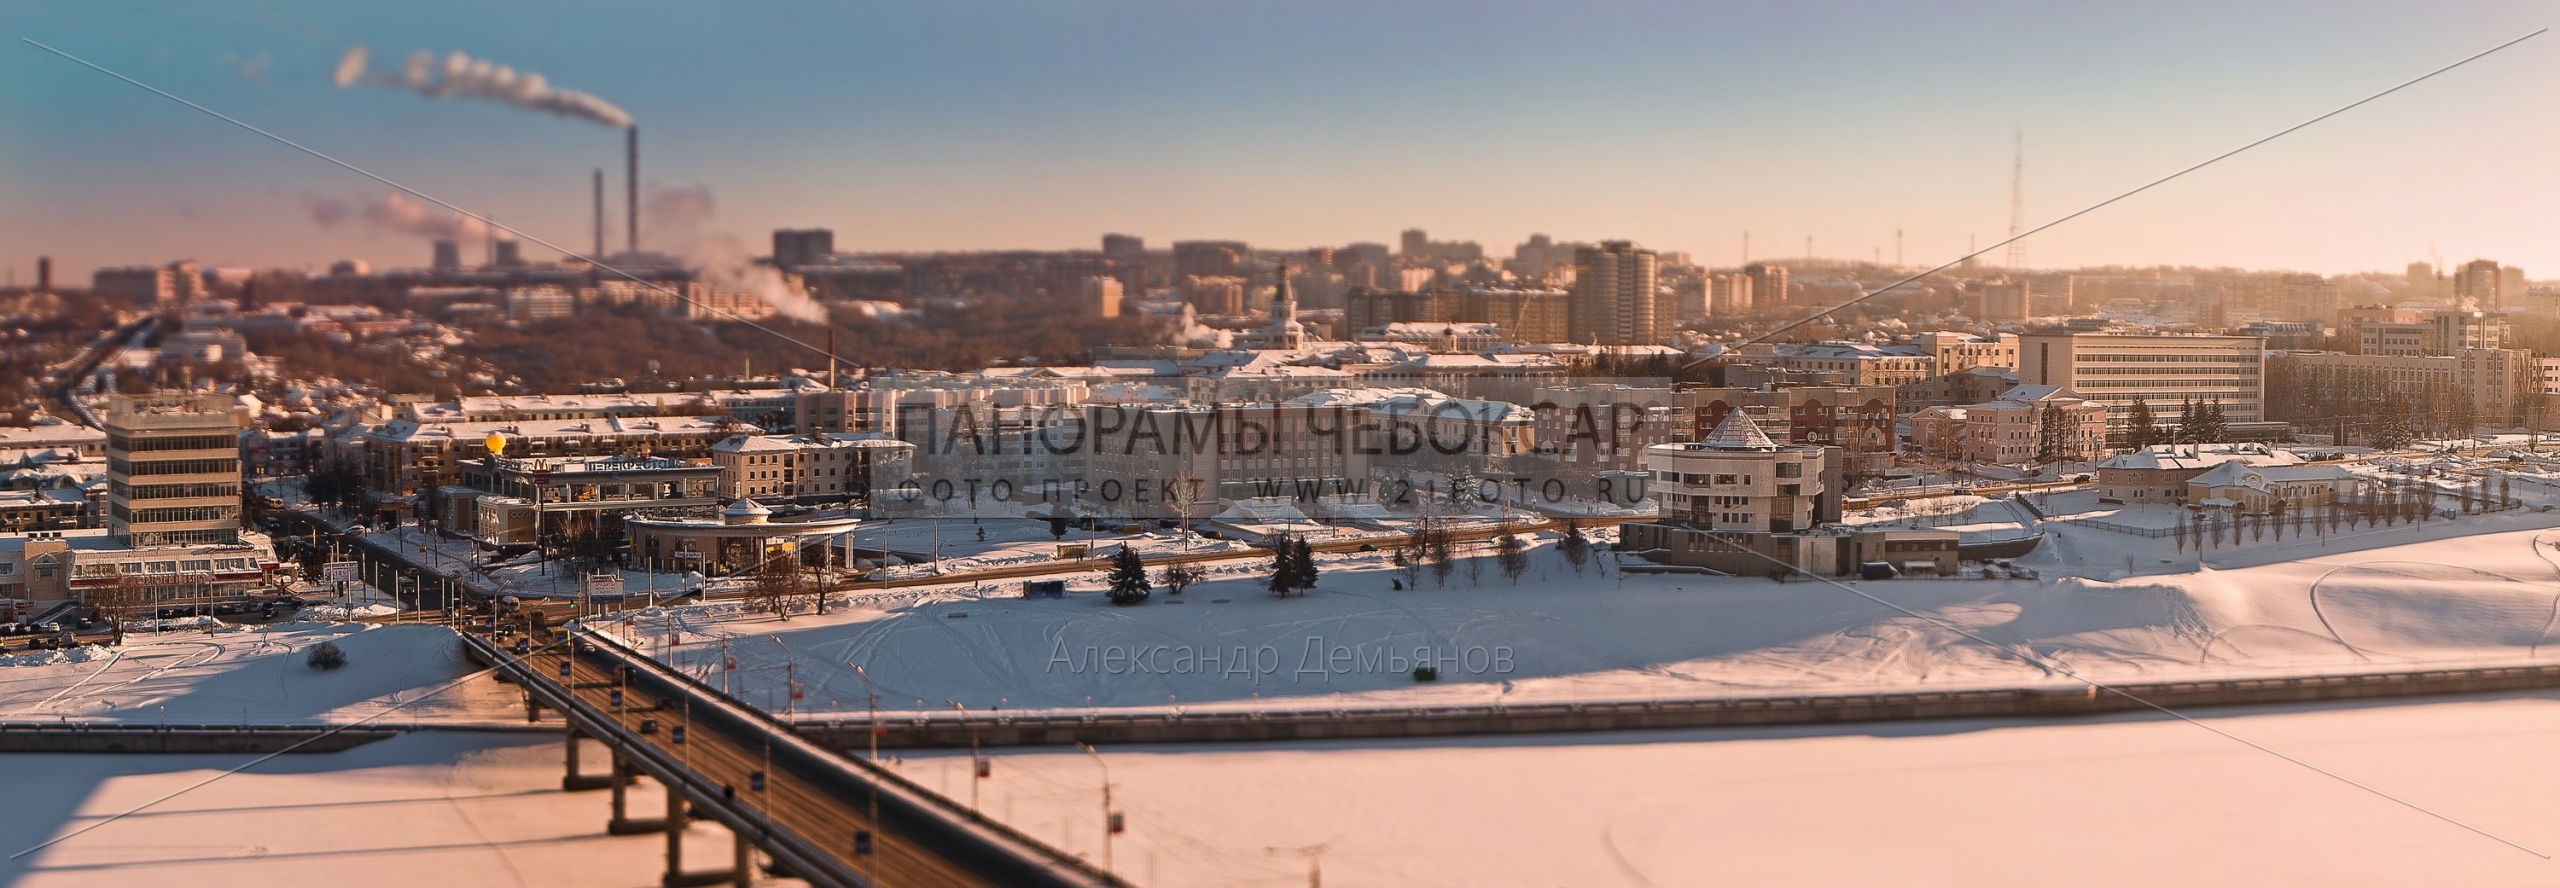 Фото-панорама Чебоксарского Залива Зимой, вид на московский мост и дом мод